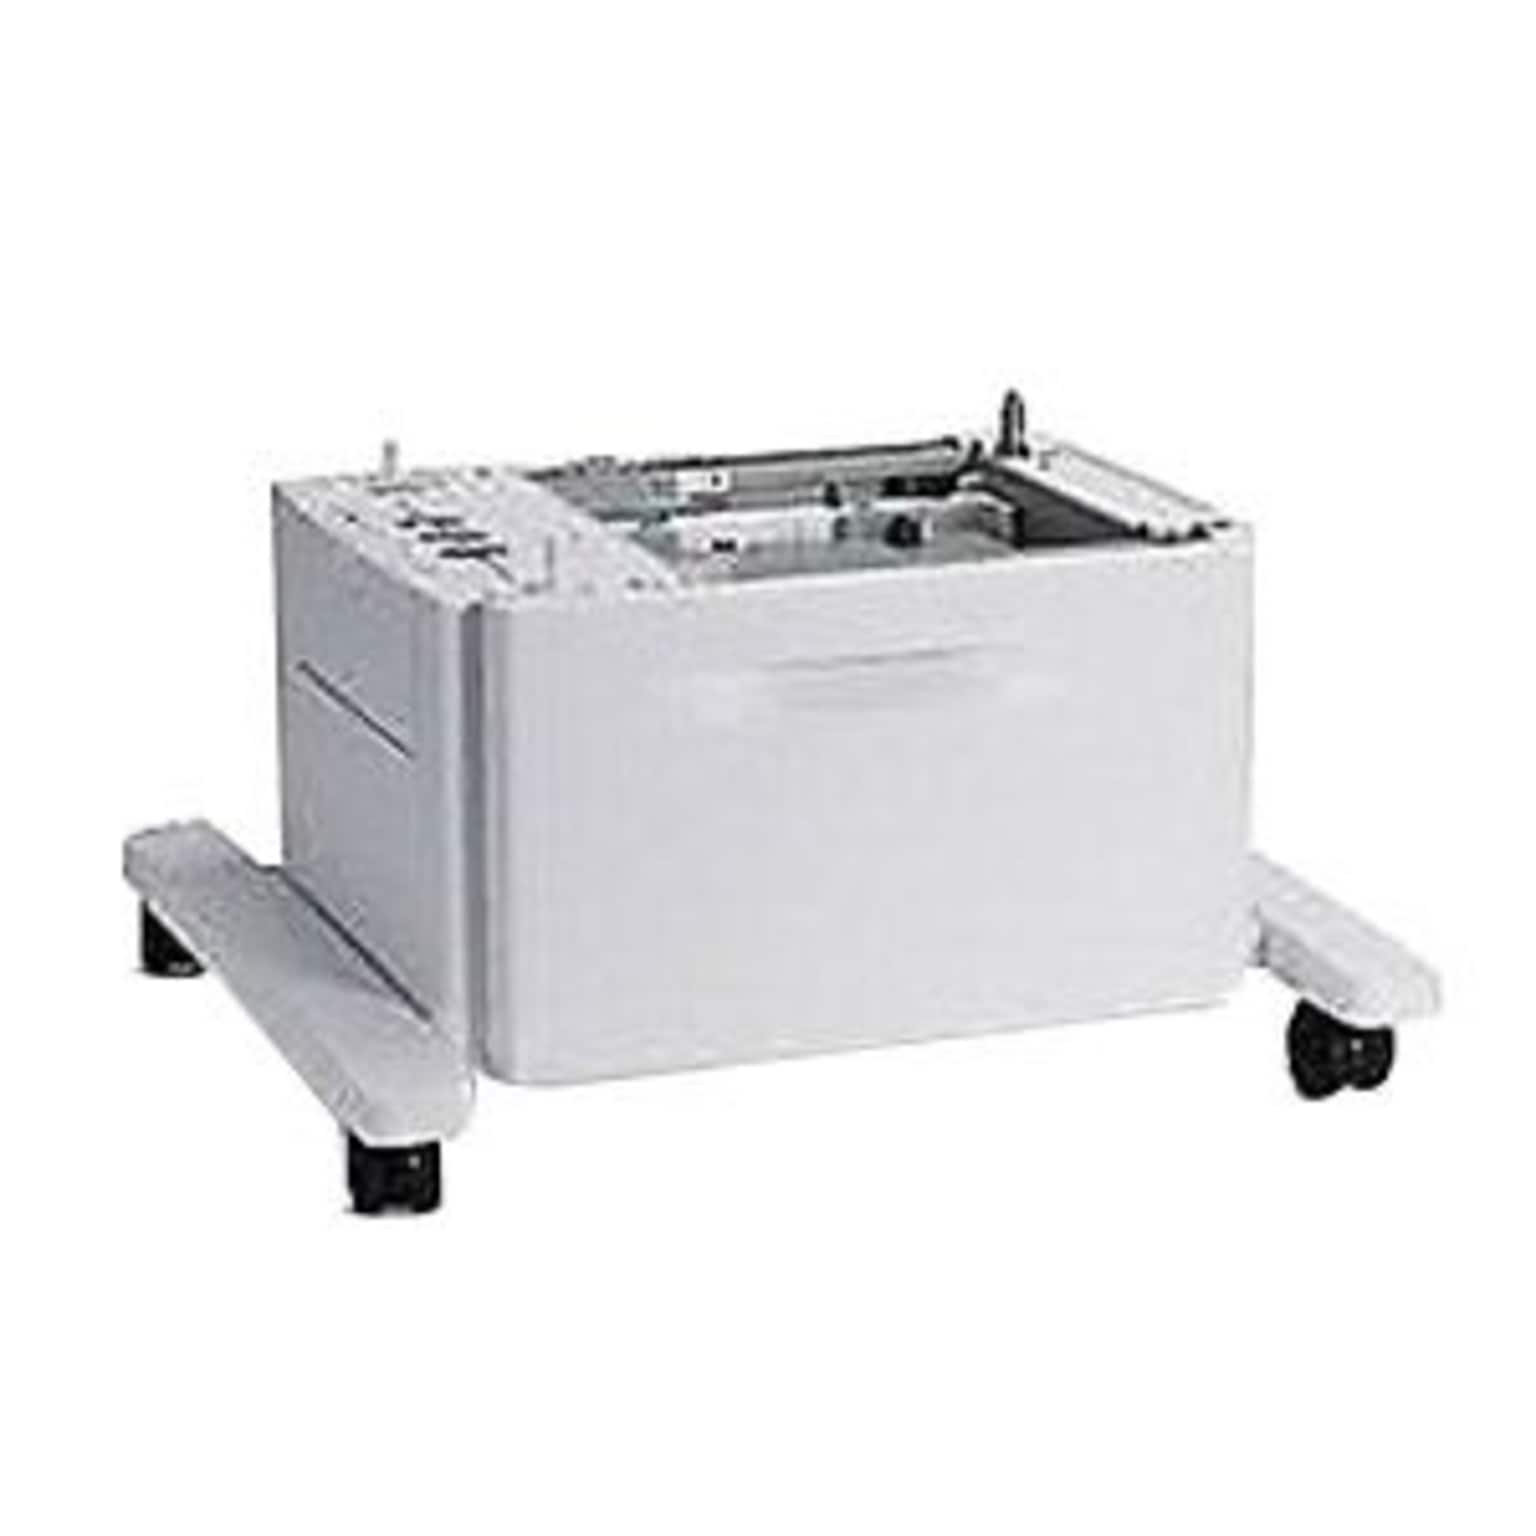 Xerox® 497K13660 Printer Stand for Phaser 3610/3615 Printer